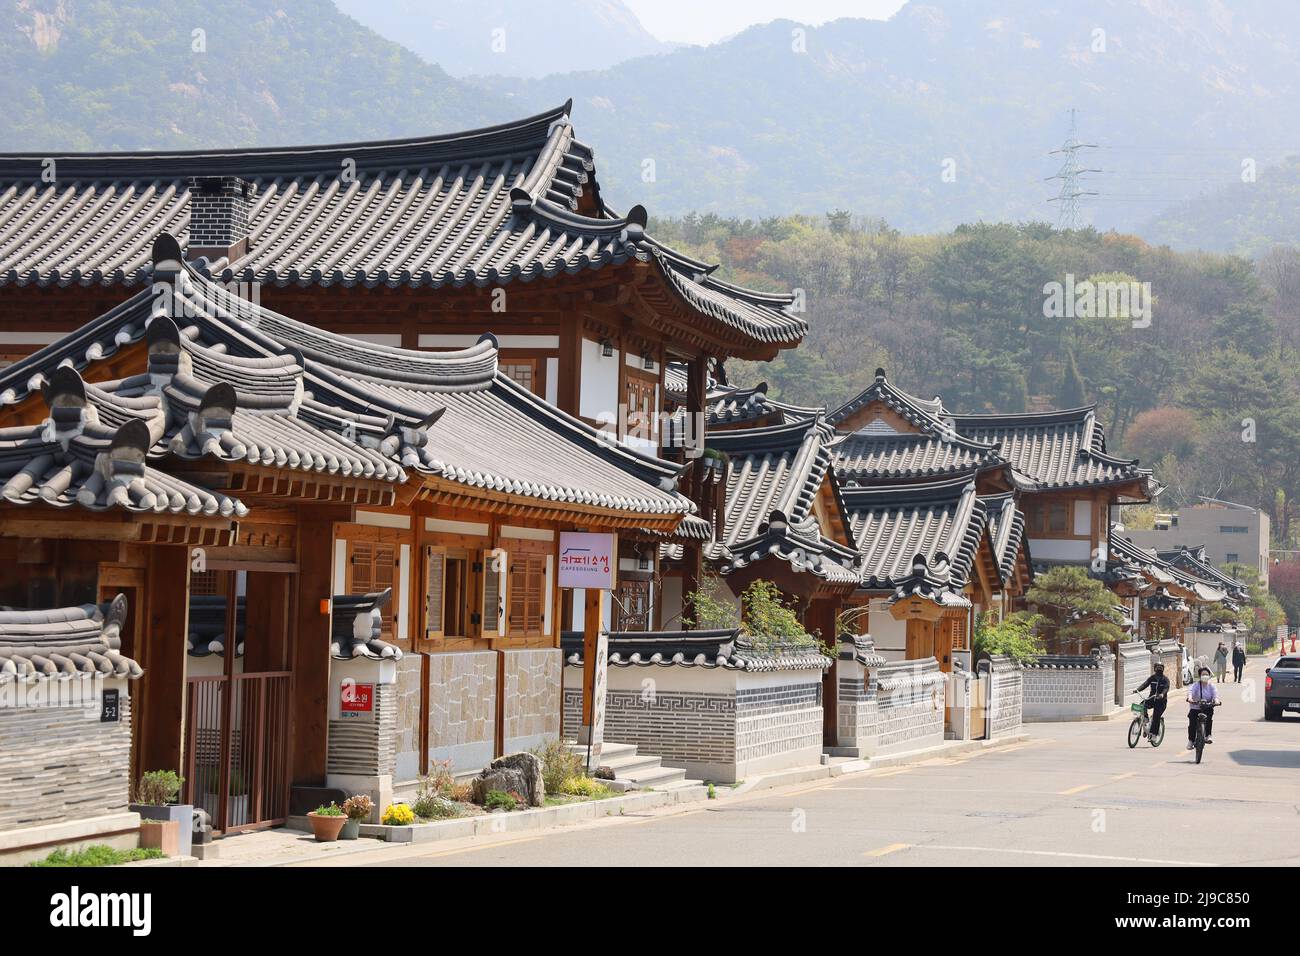 A street of the traditional yet modern Hanuk village of Eunpyong, South Korea. Stock Photo